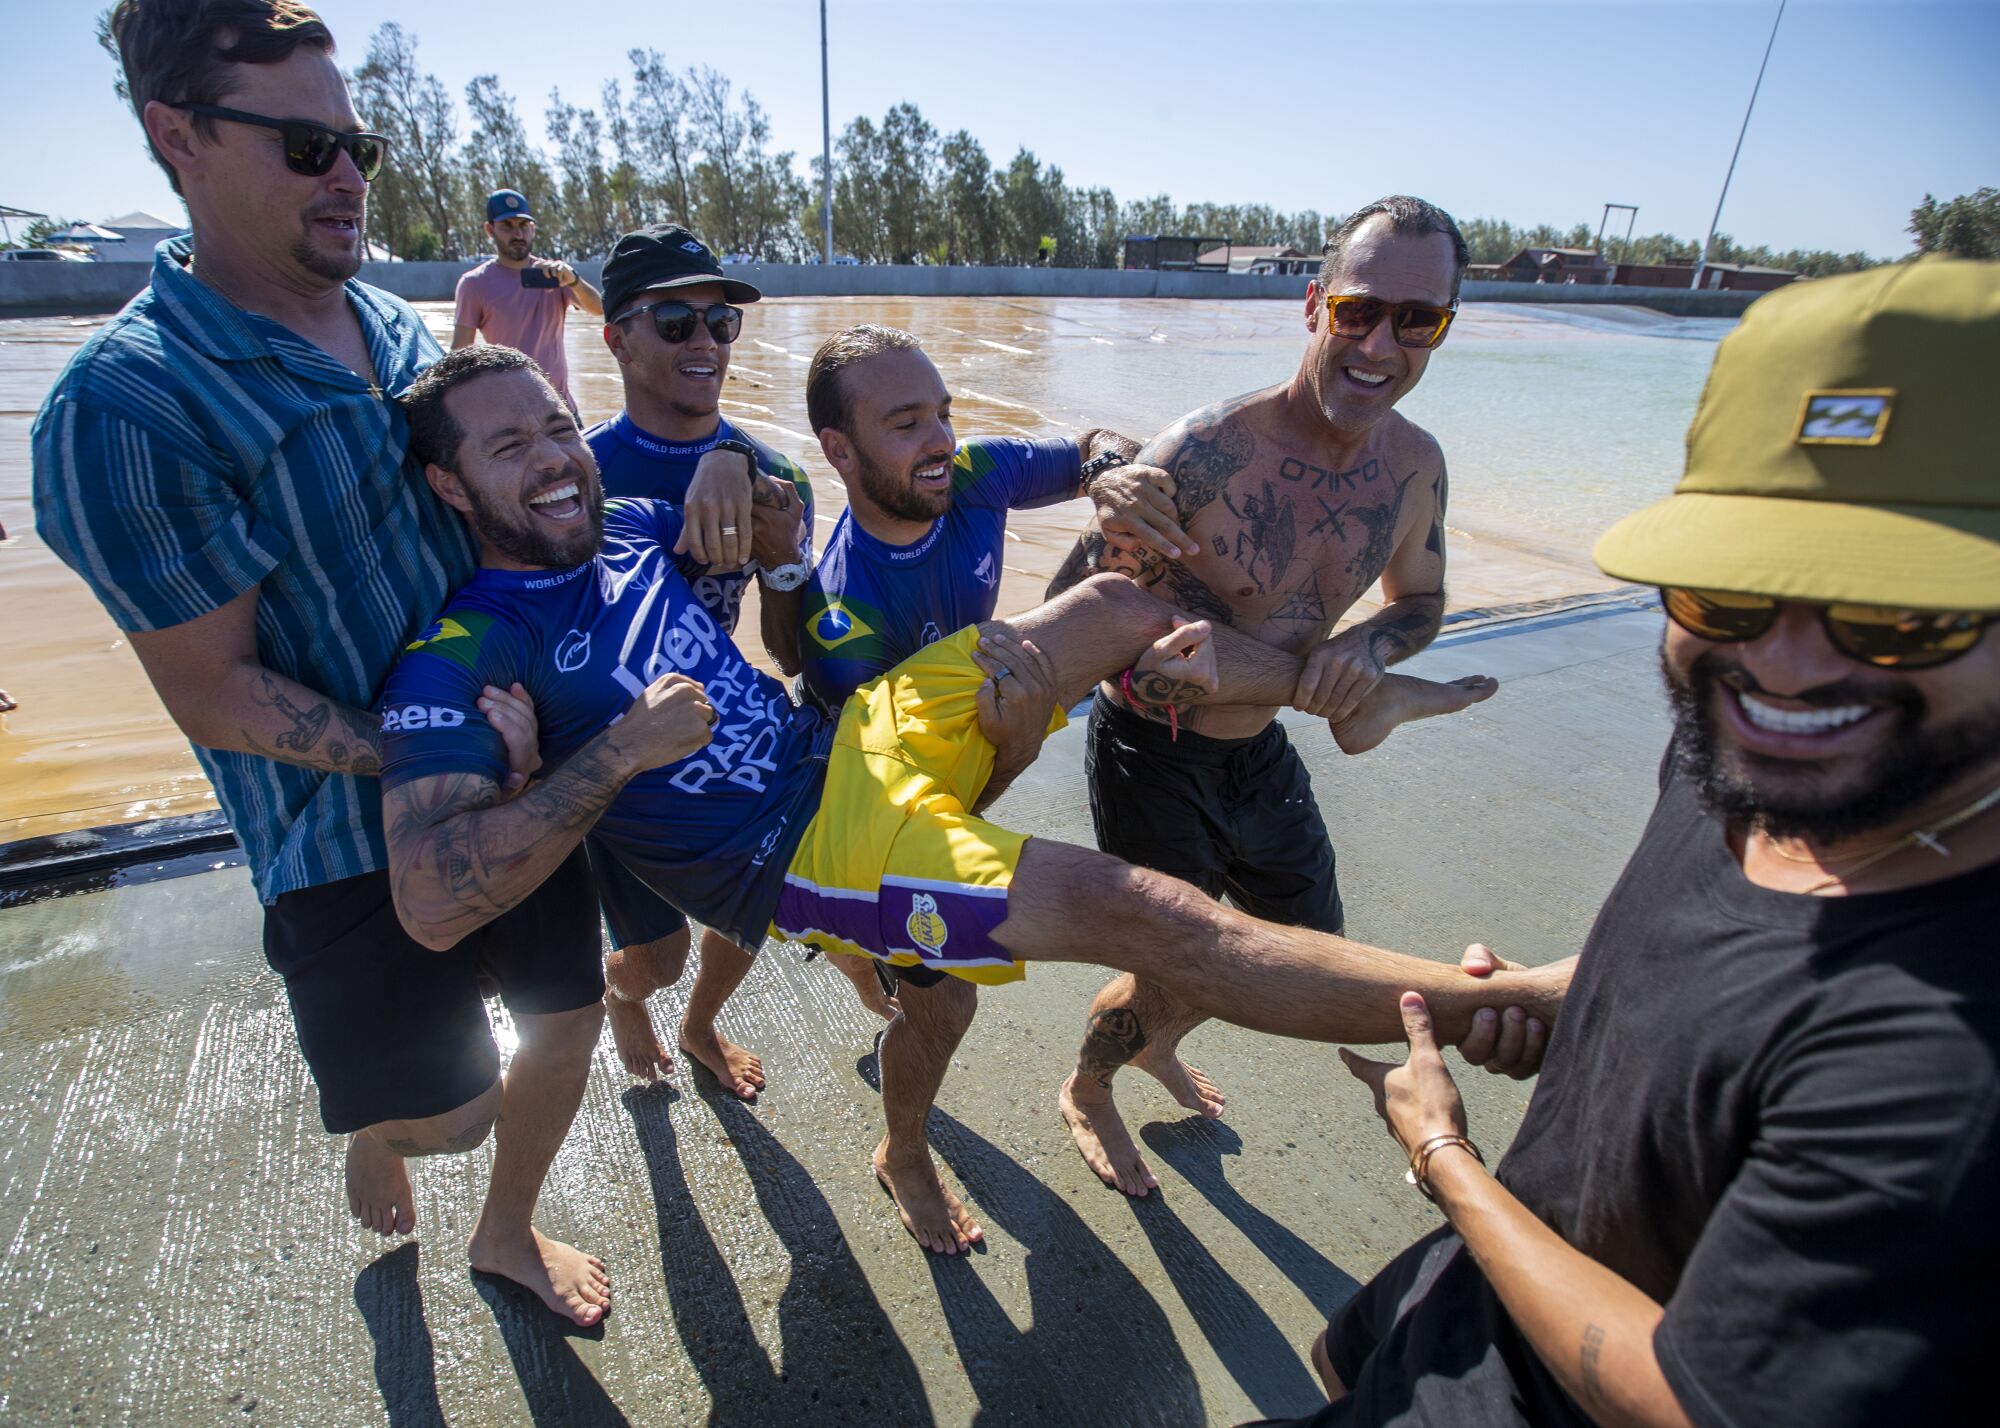 Friends carry surfer Adriano de Souza into the water.